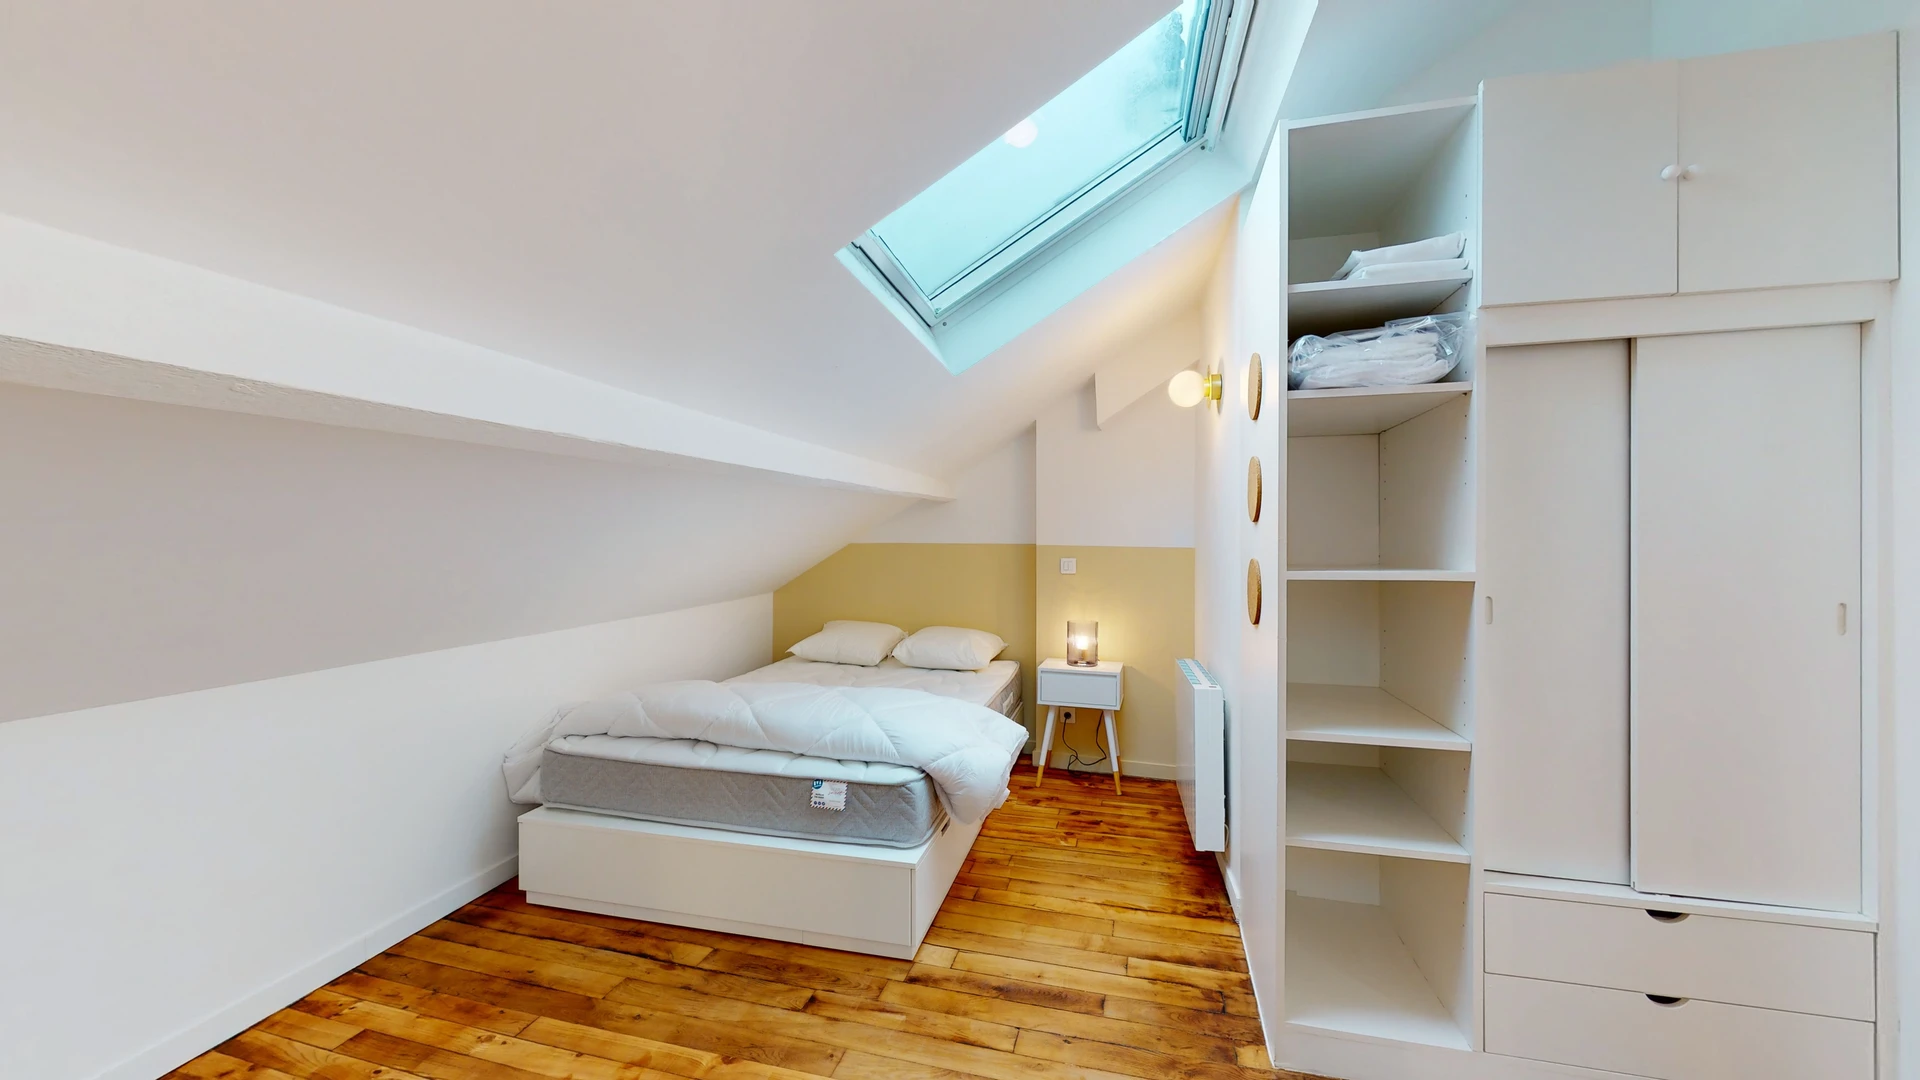 Habitación en alquiler con cama doble París